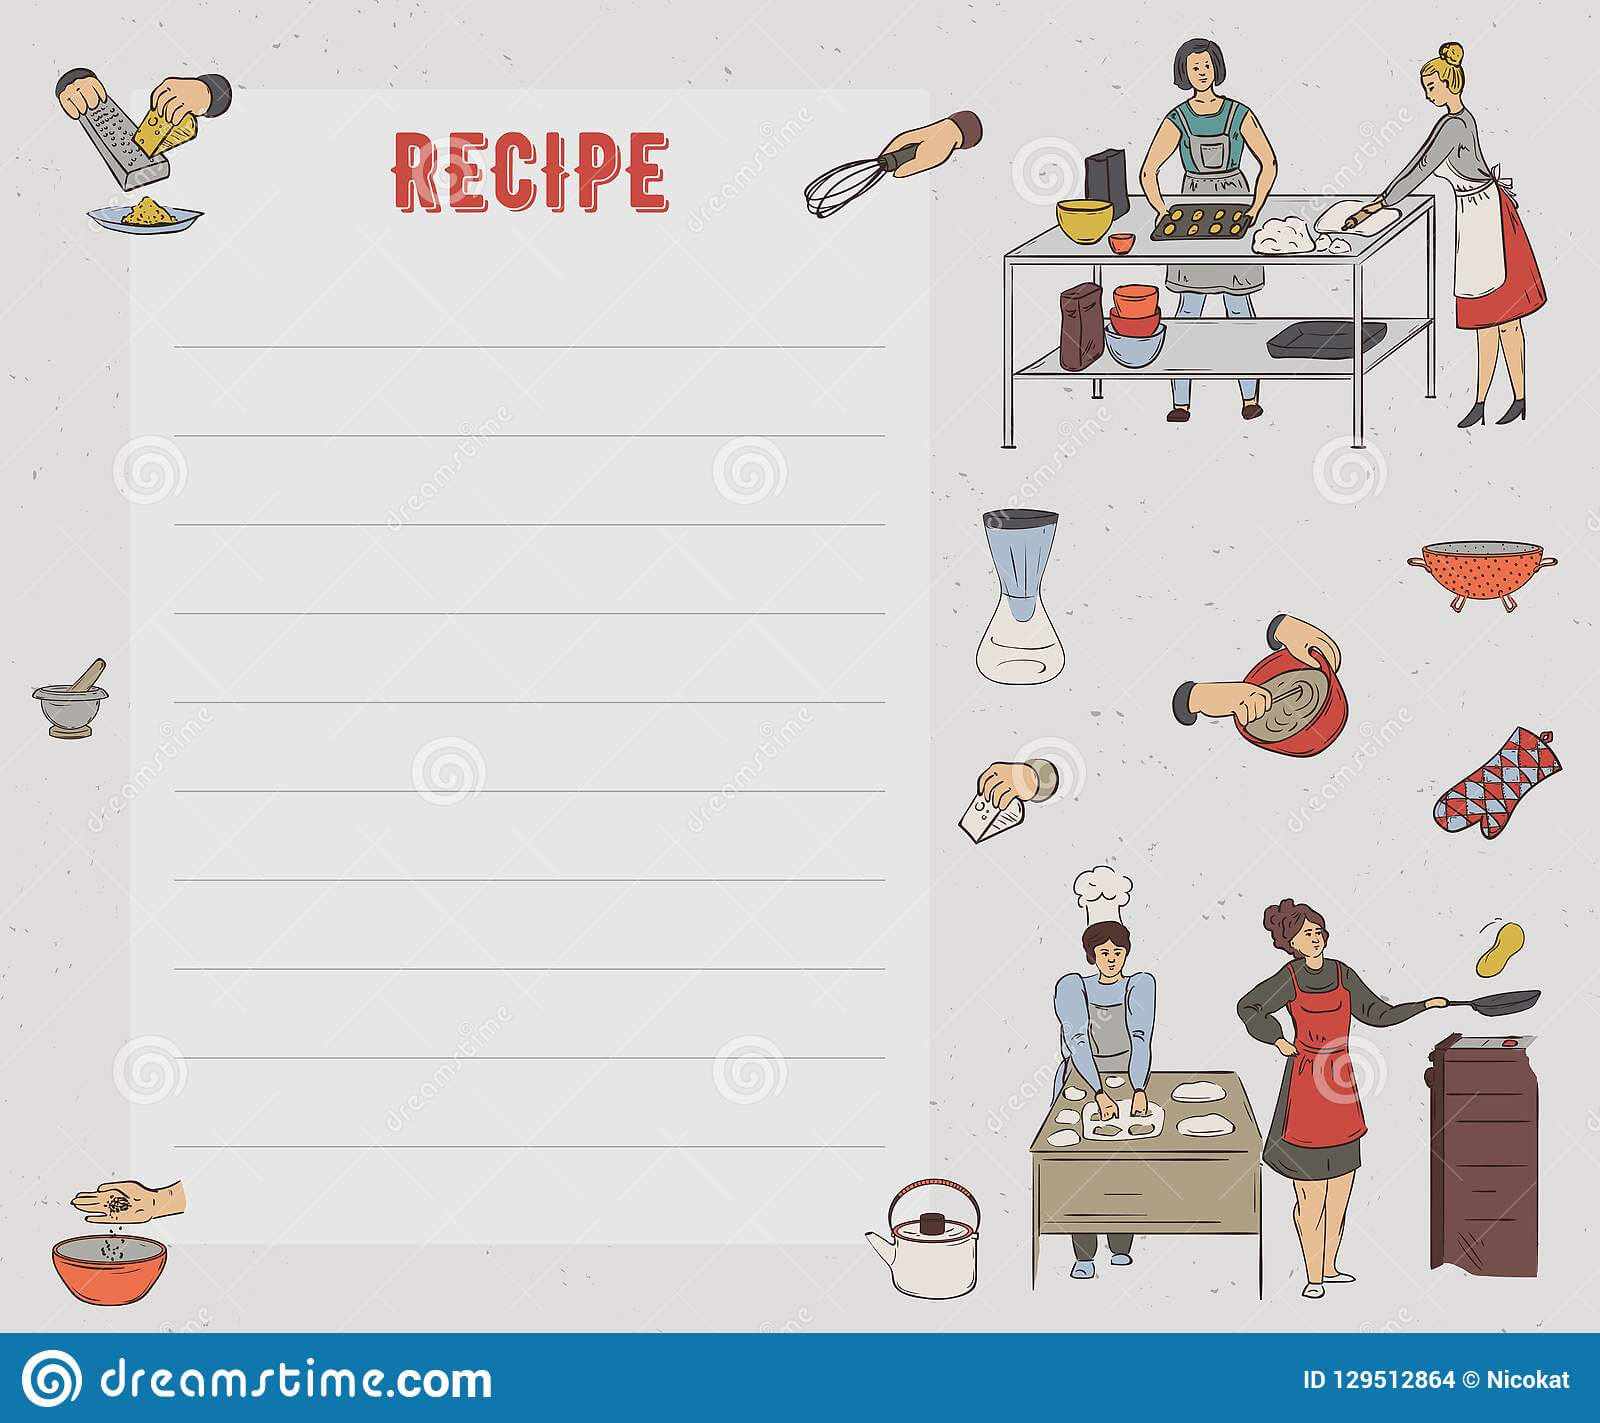 Recipe Card. Cookbook Page. Design Template With People Regarding Recipe Card Design Template